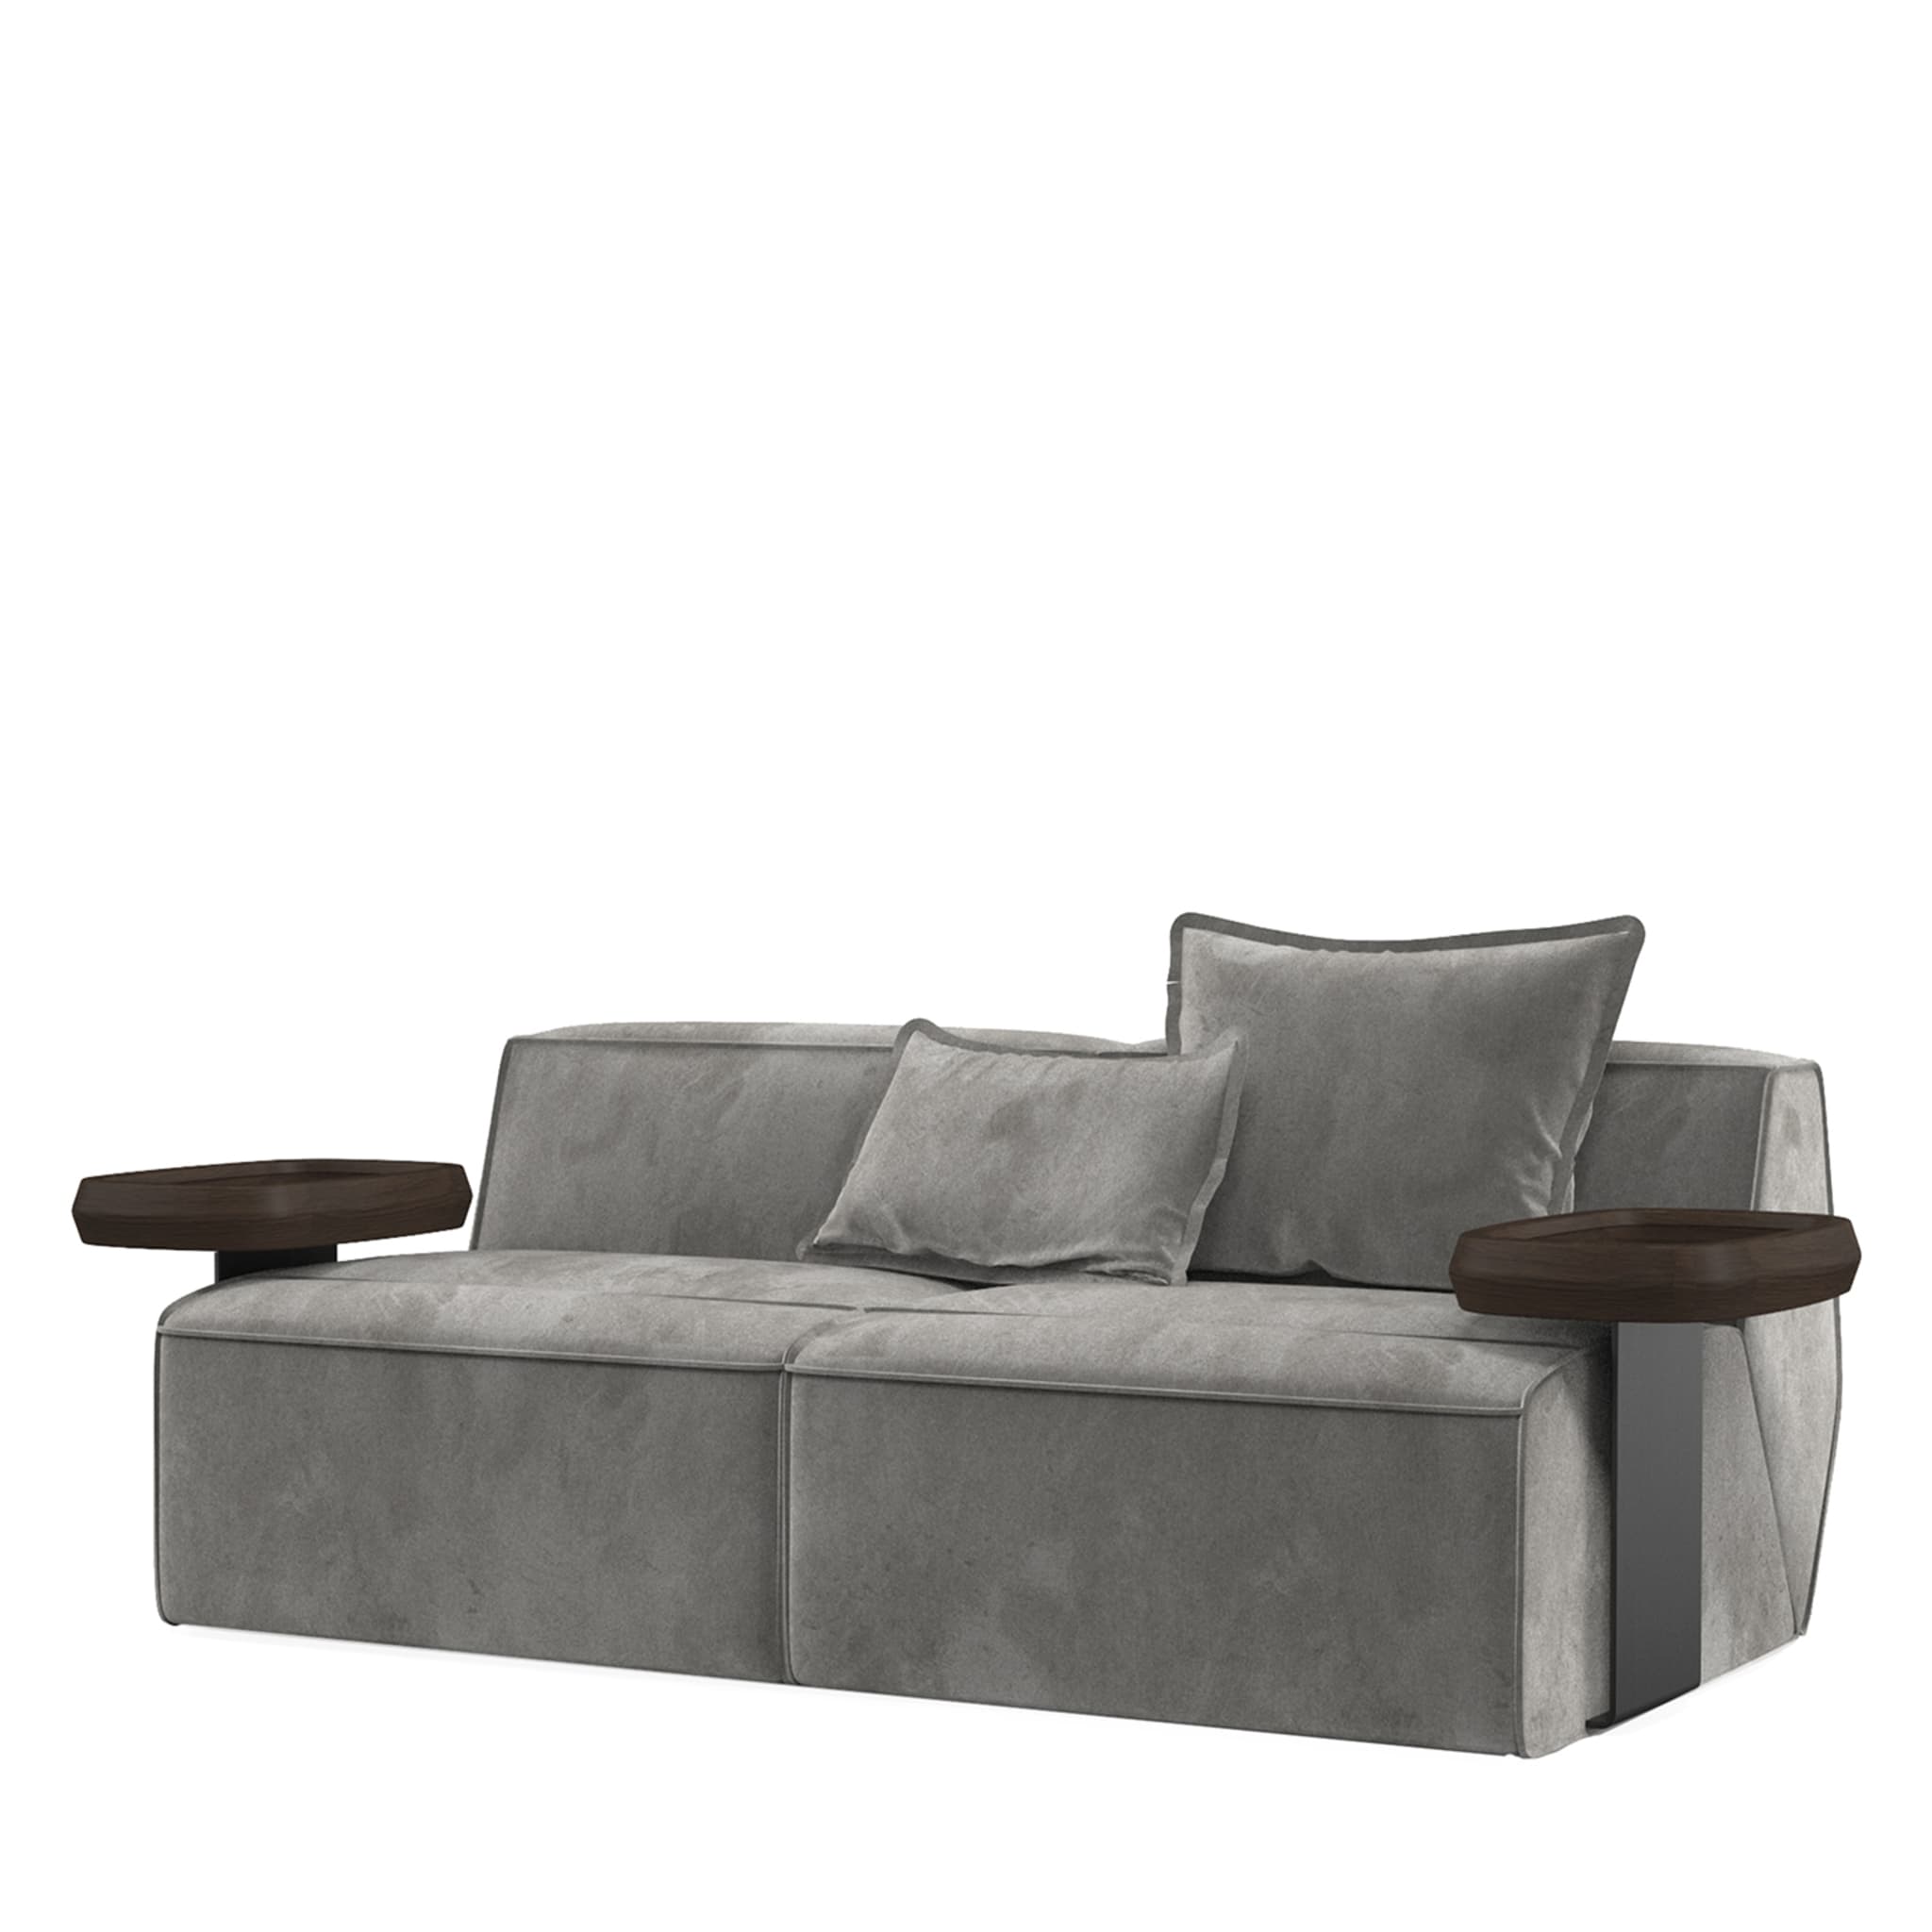 Infinito Small Gray Sofa with Side Tables by Lorenza Bozzoli - Main view